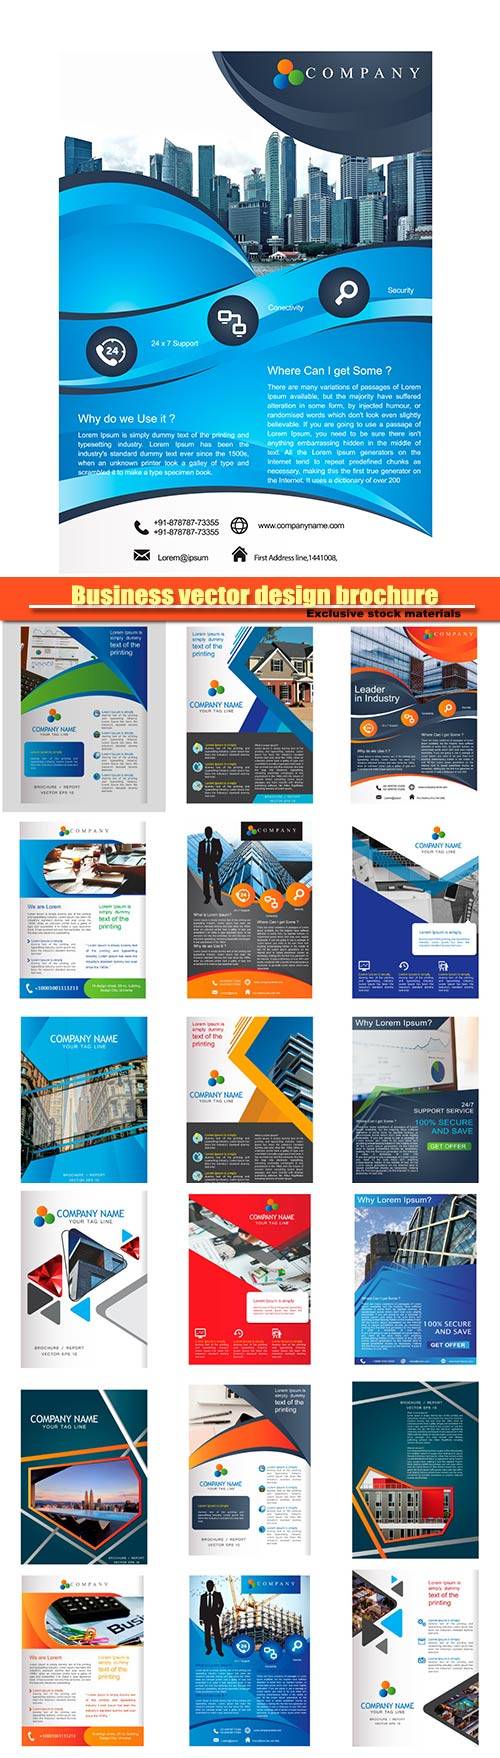 Business vector design brochure, banner template